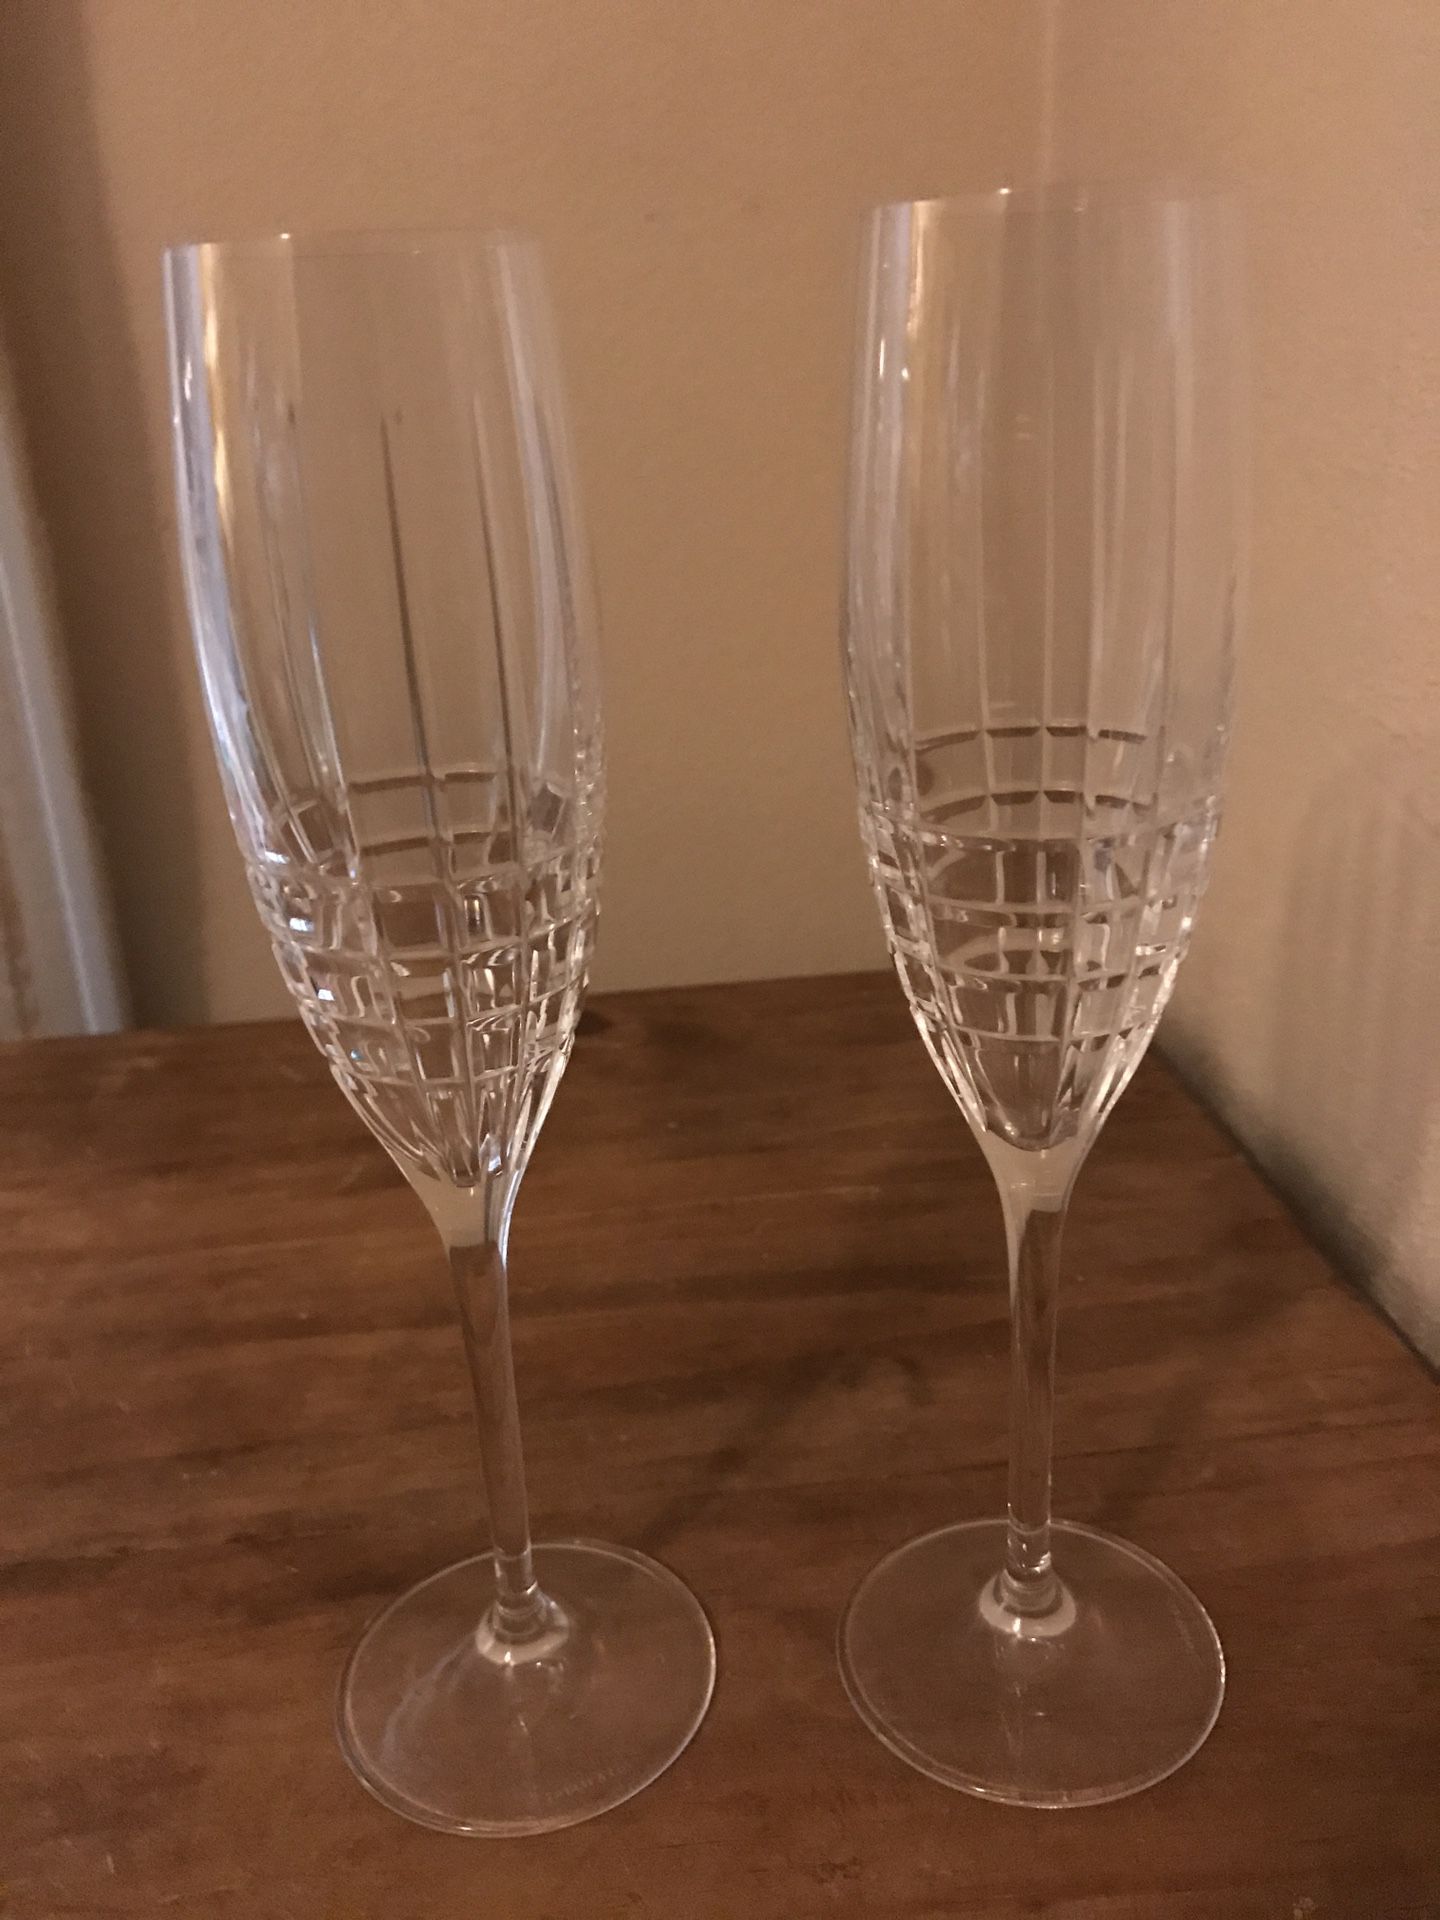 2 Champaign glasses